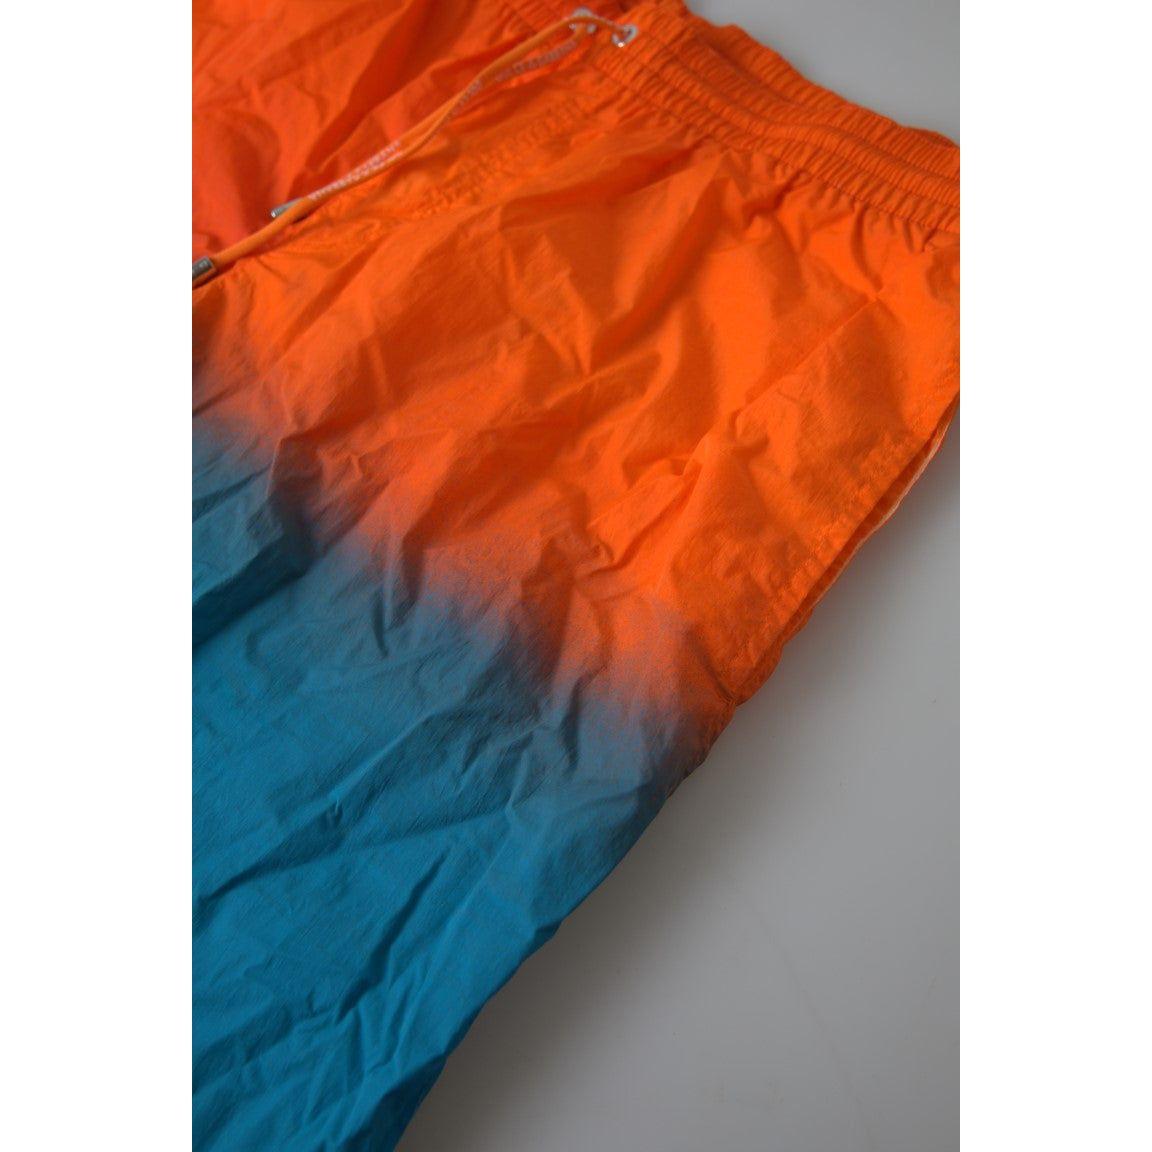 Dolce & Gabbana Gradient Effect Swim Shorts in Vibrant Orange orange-blue-gradient-beachwear-swimwear-shorts